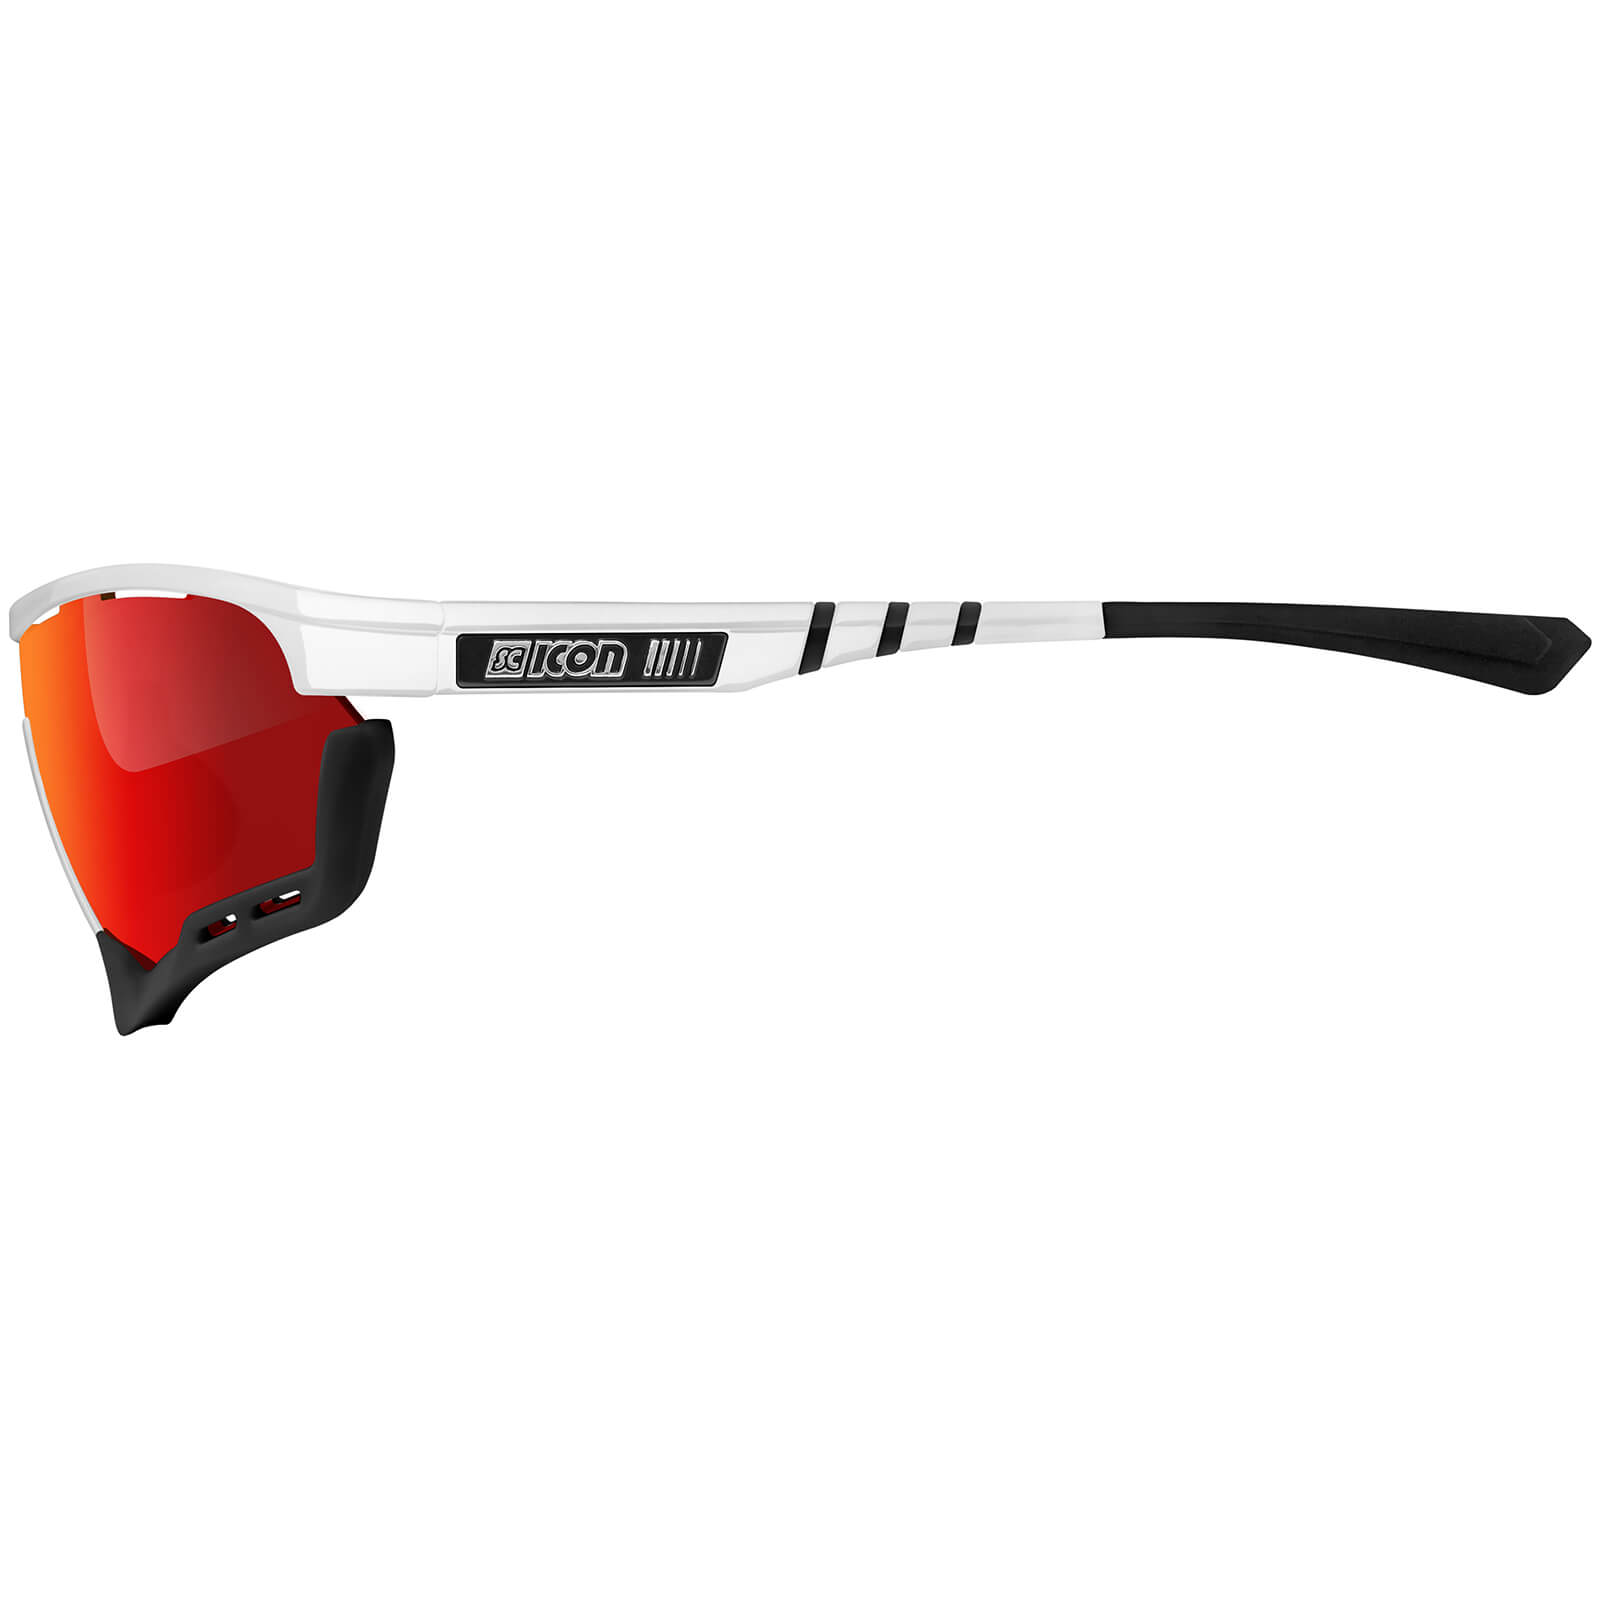 Scicon Aerotech Xl Road Sunglasses - White Gloss - Multilaser Red